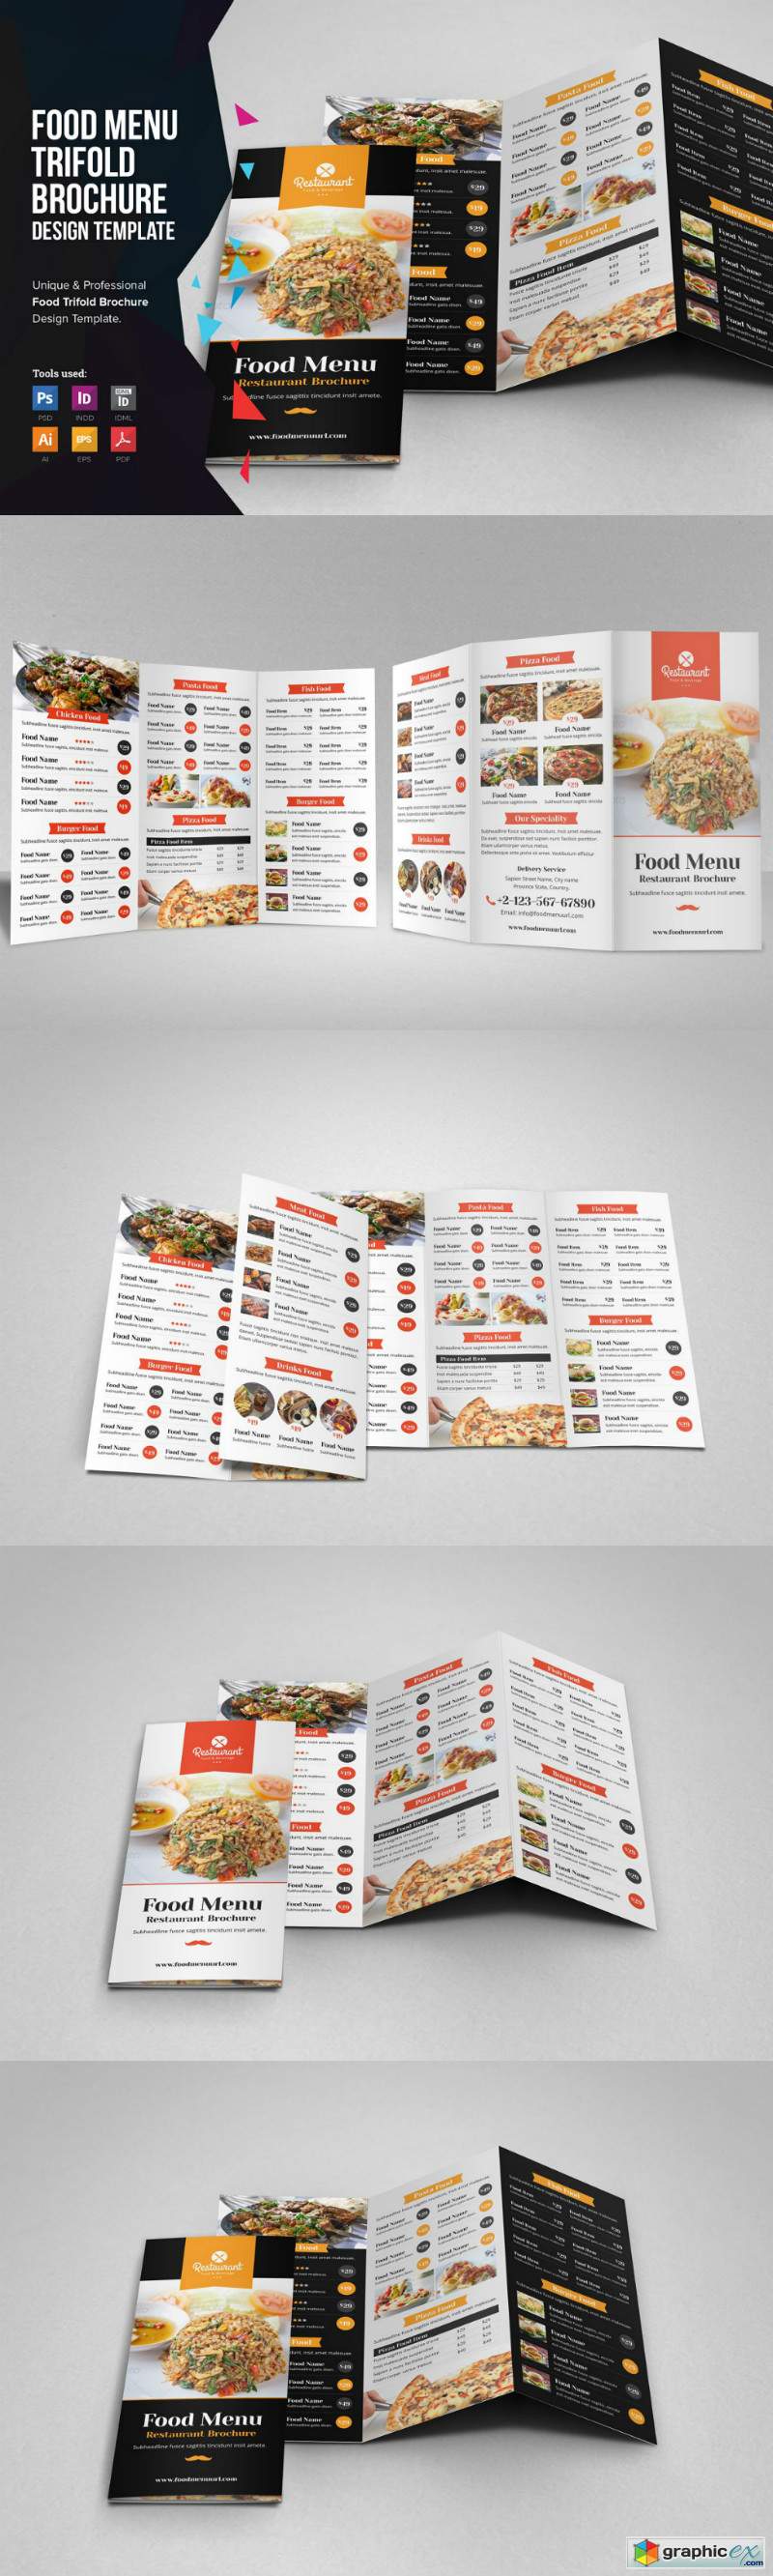 Food Menu Trifold Brochure v1